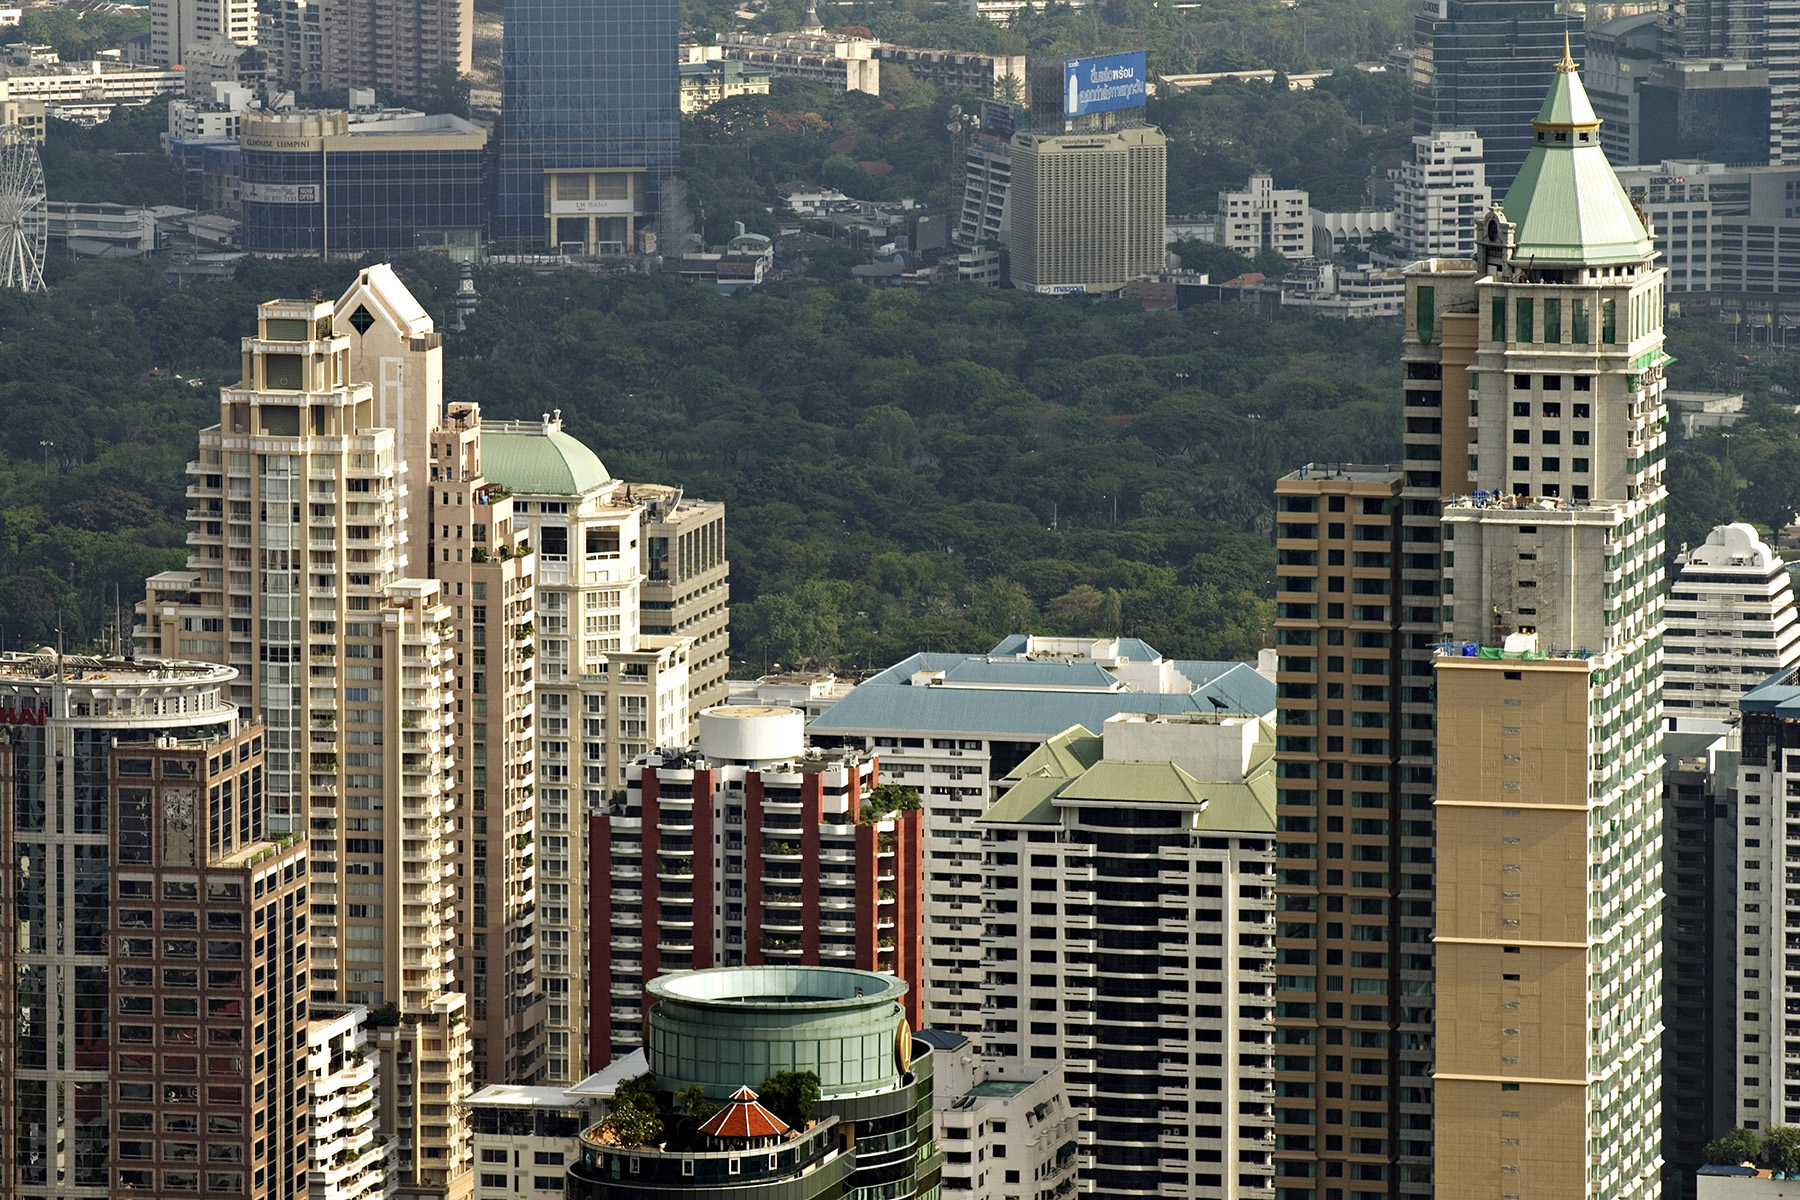 Bangkok skyscrapers and condominiums

